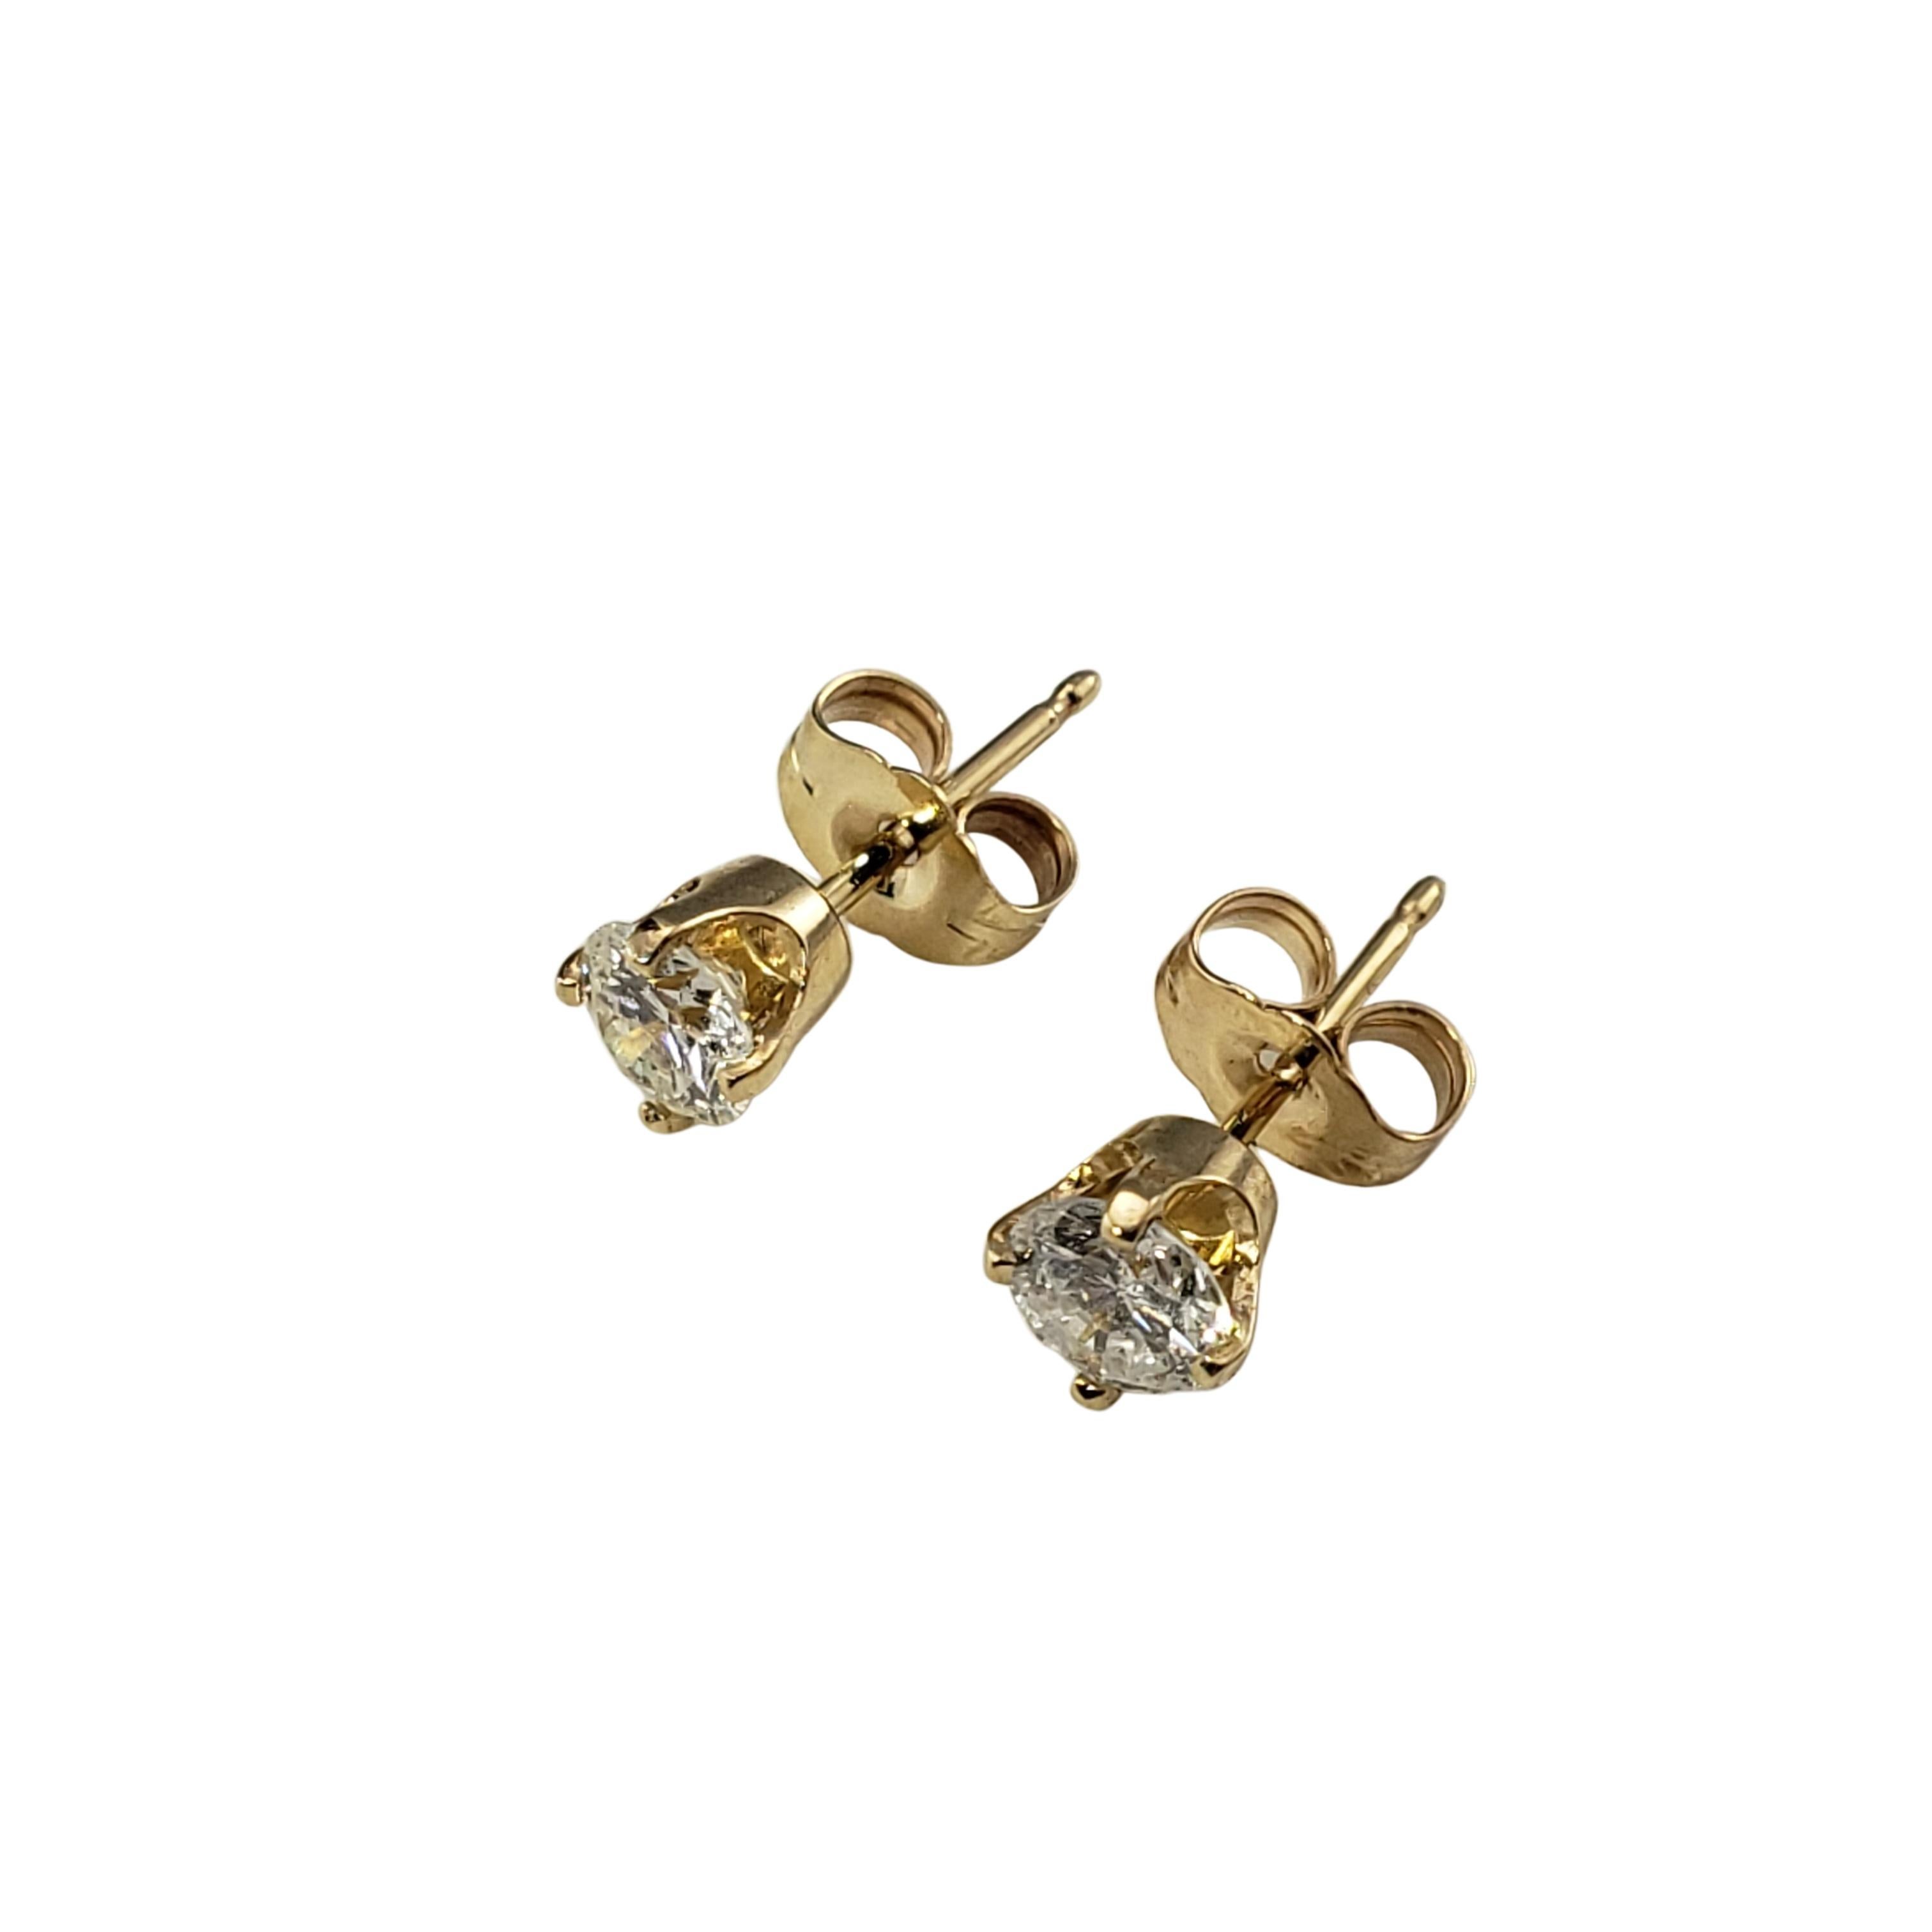 Brilliant Cut 14 Karat Yellow Gold Diamond Stud Earrings .60 TCW. For Sale